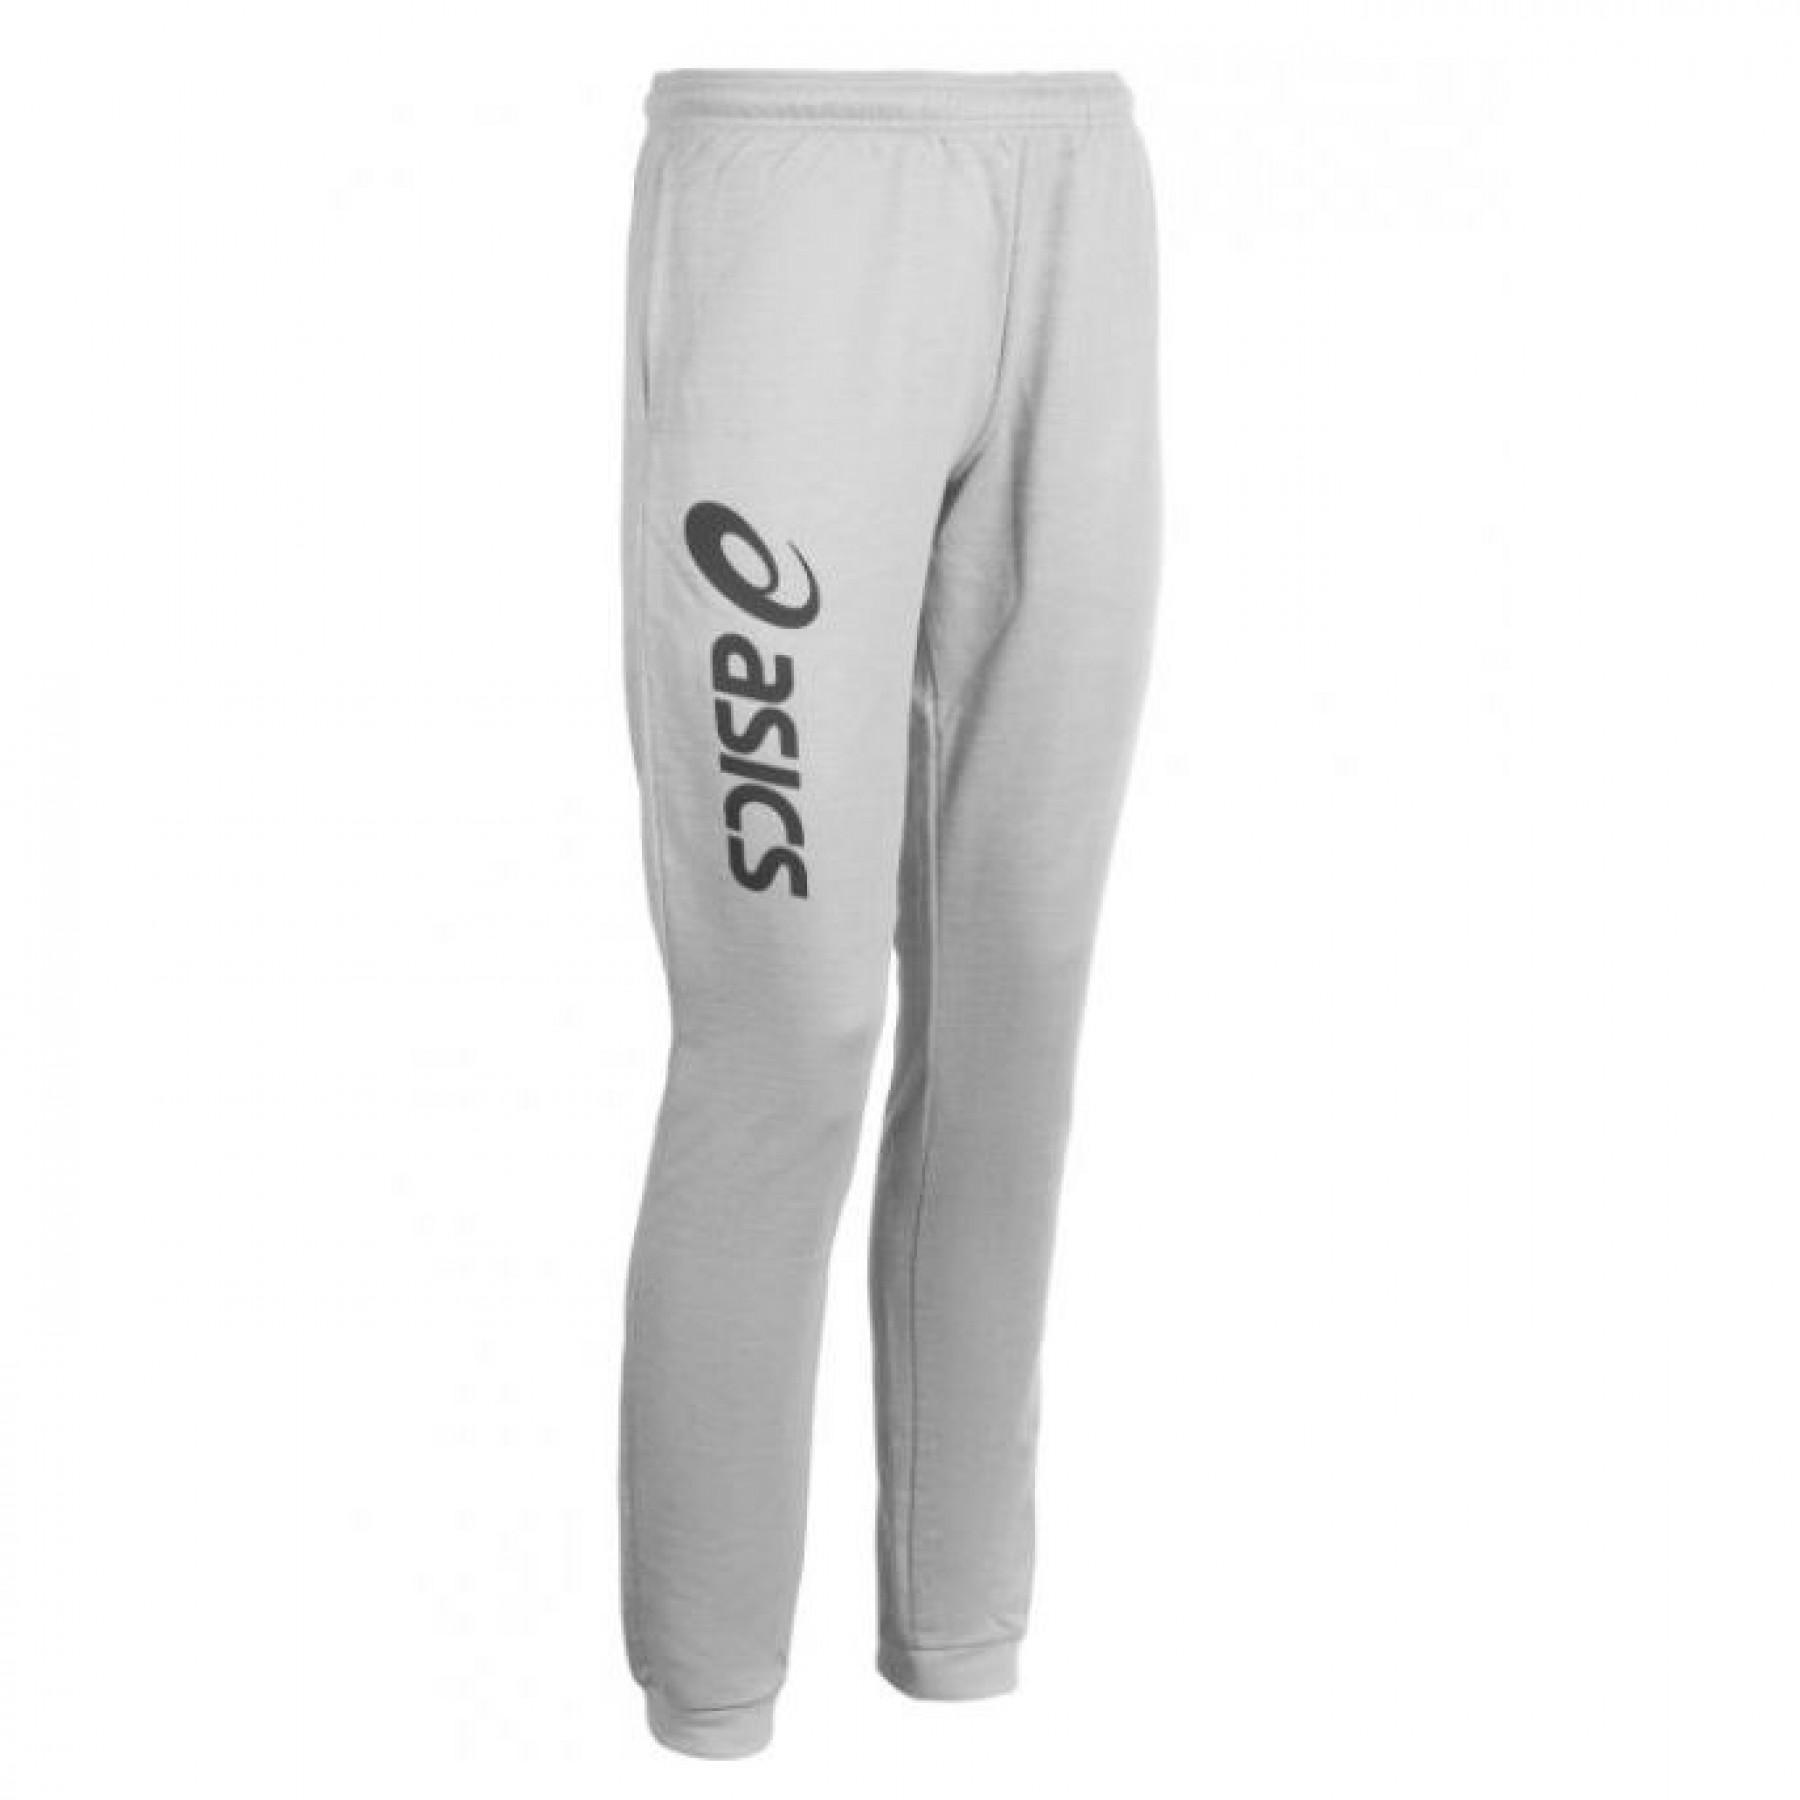 Jogging Asics Sigma - Pantalons et collants - Textile homme - Running